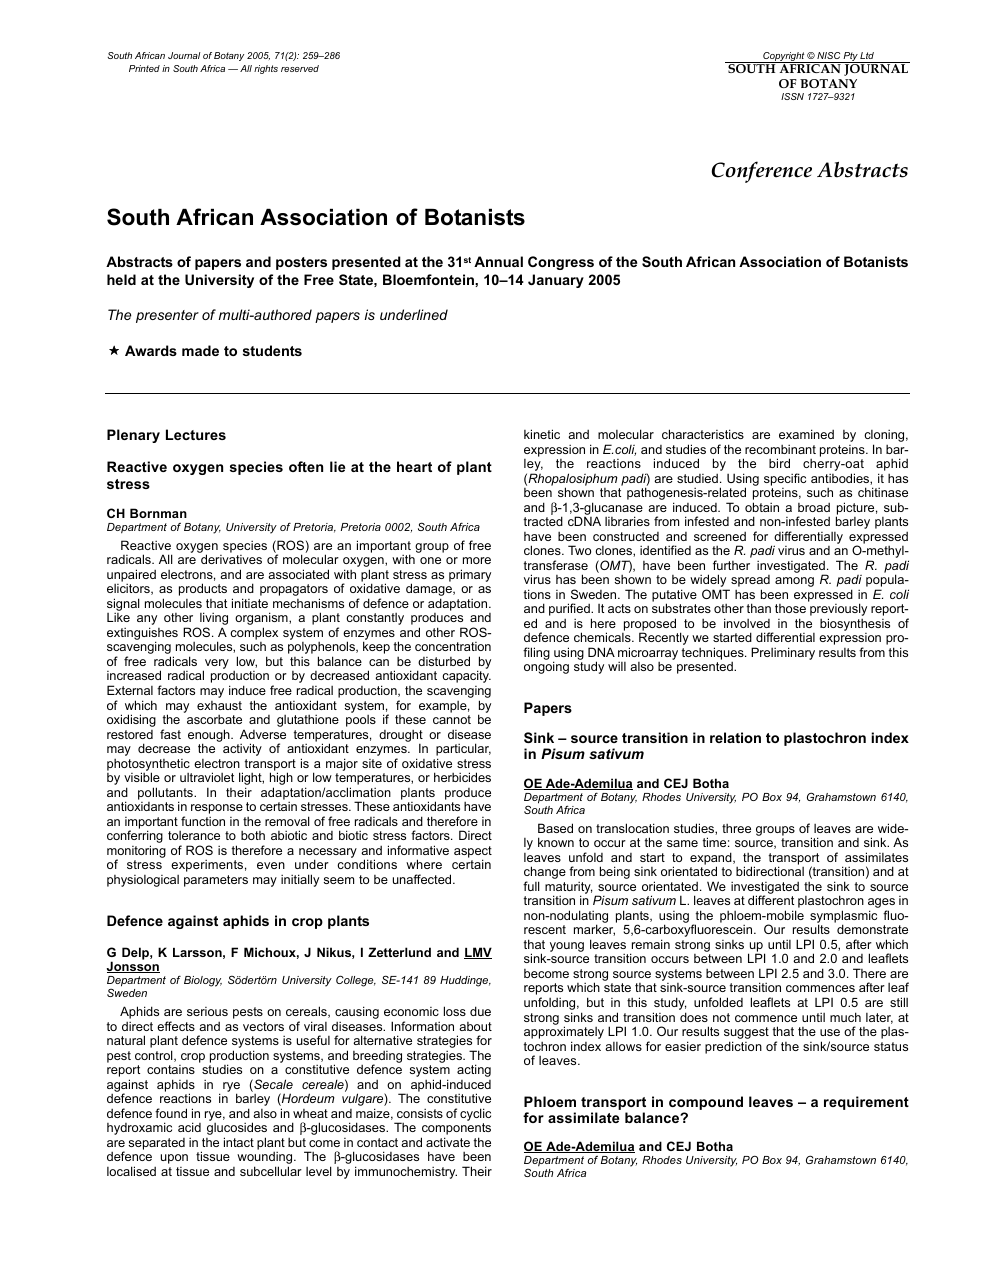 South African Association of Botanists image